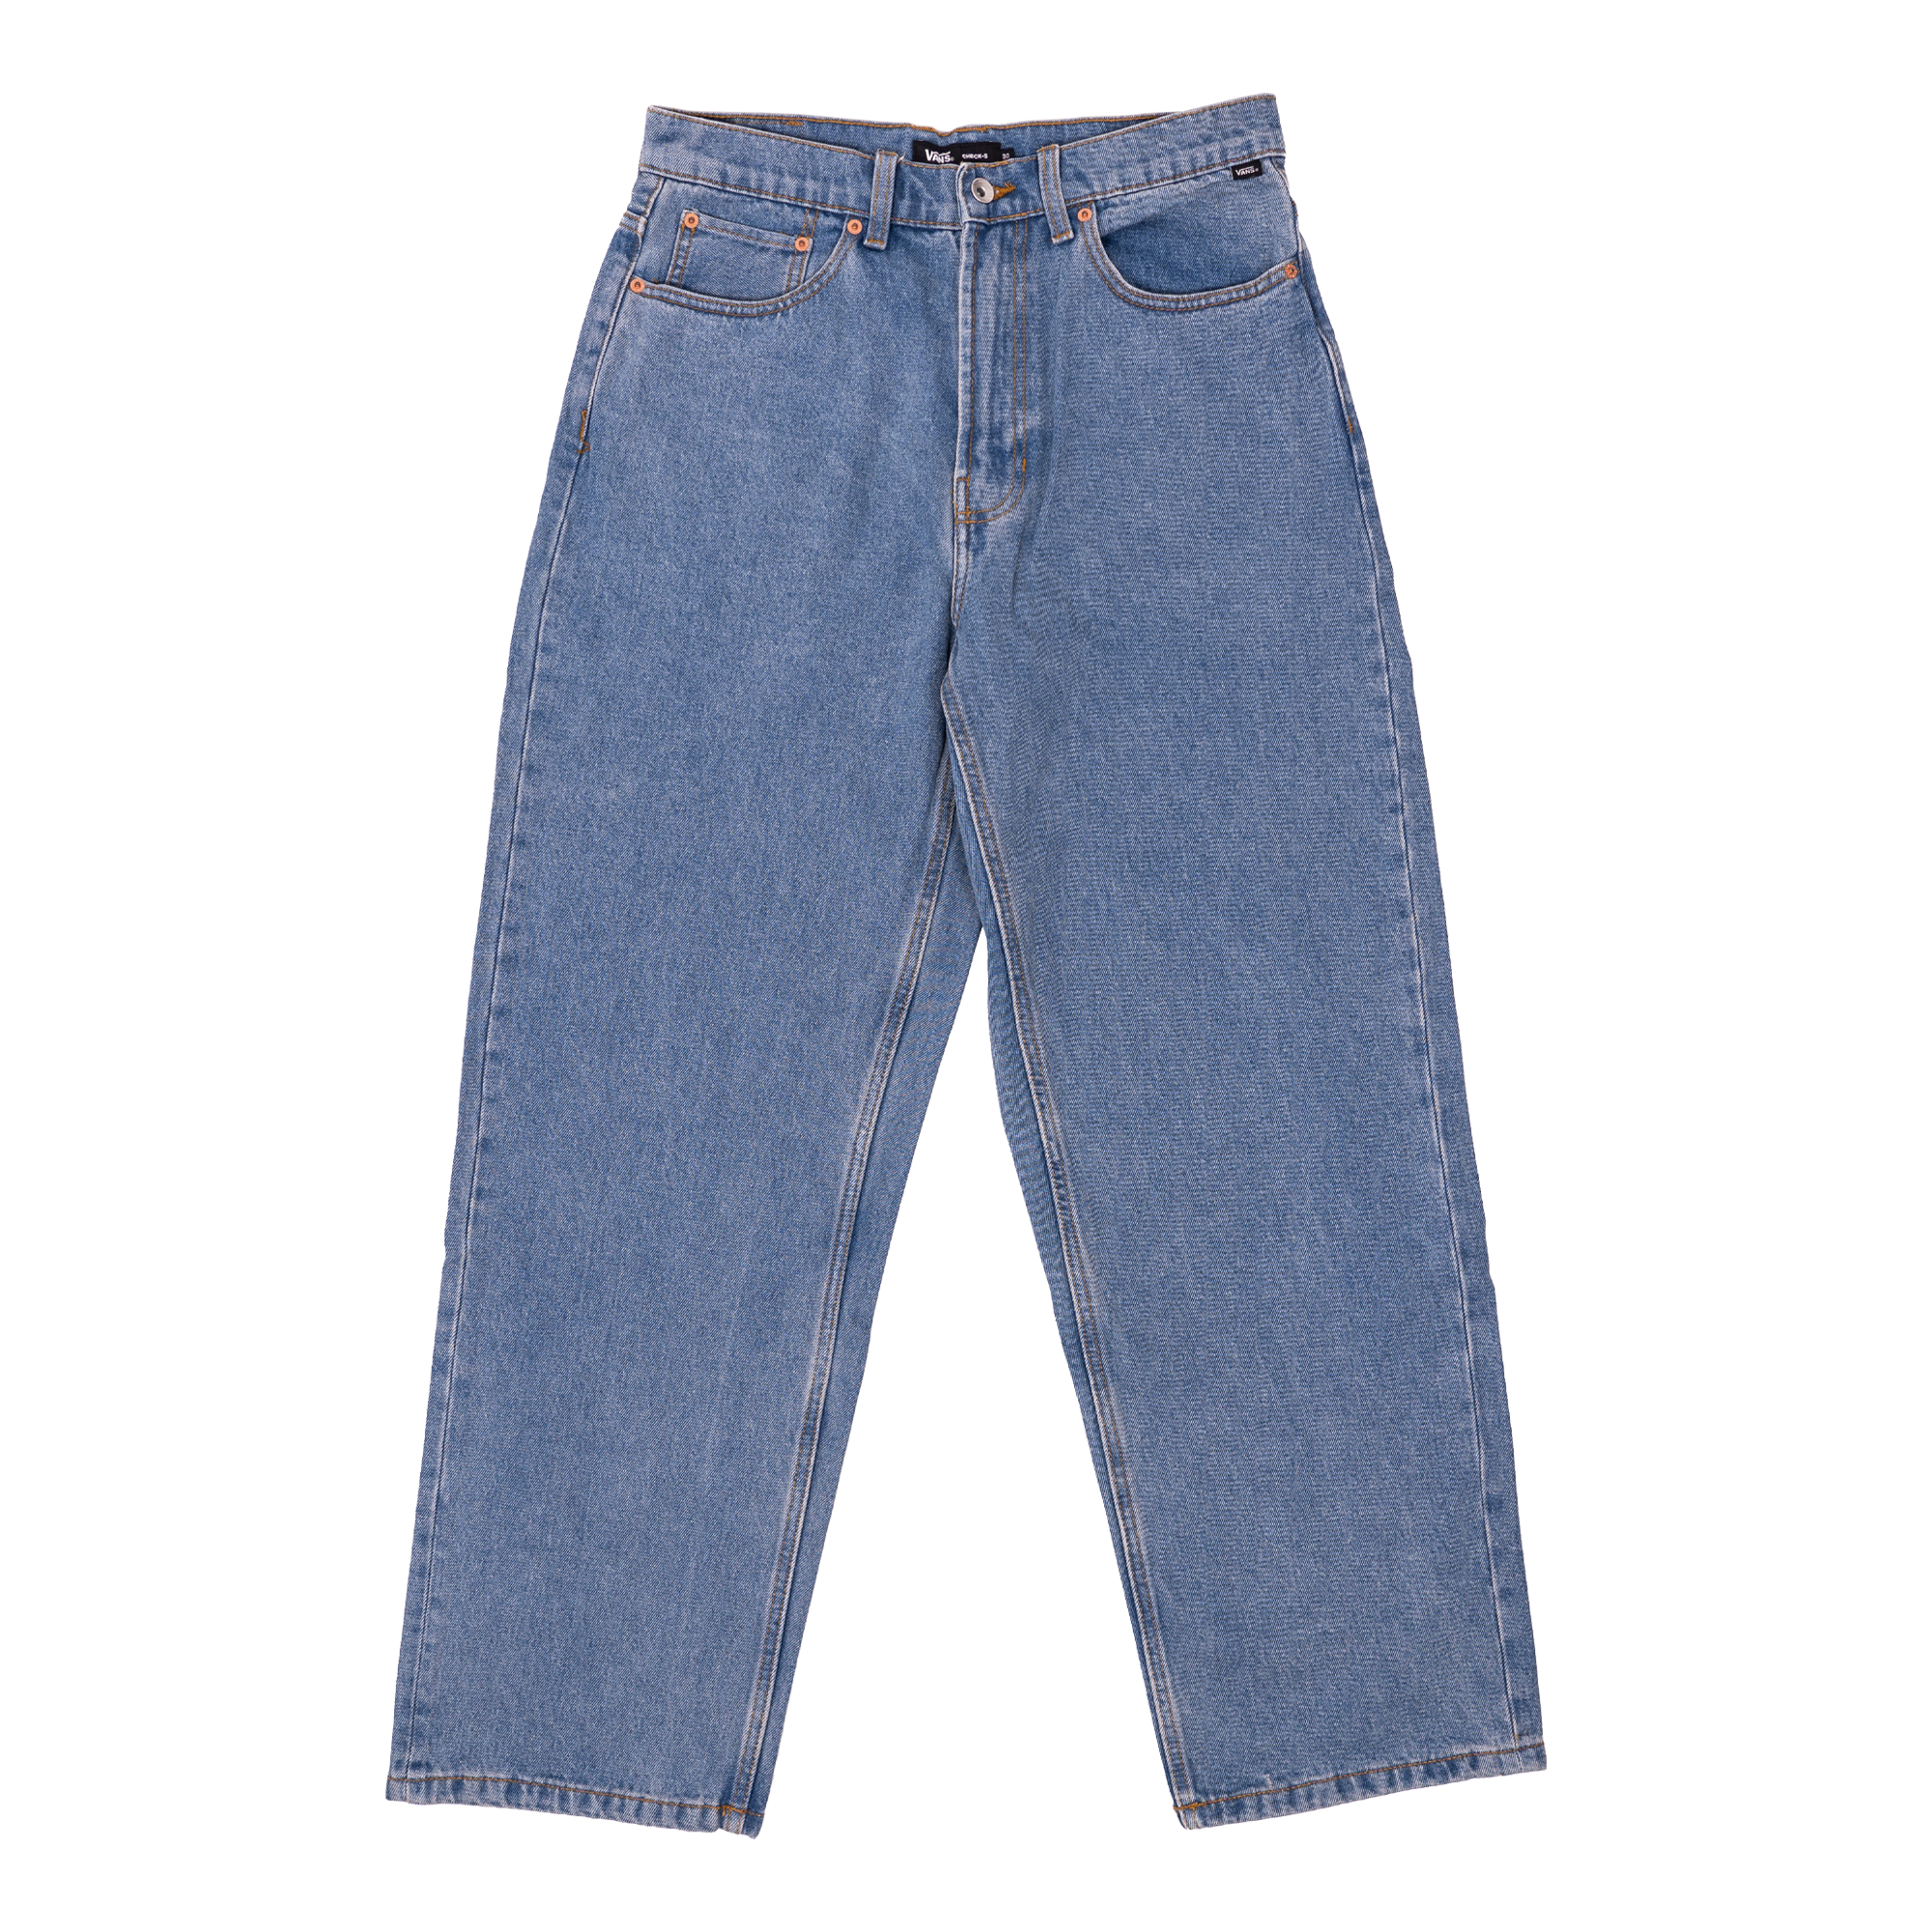 Stonewash/Blue Check-5 Baggy Vans Pants